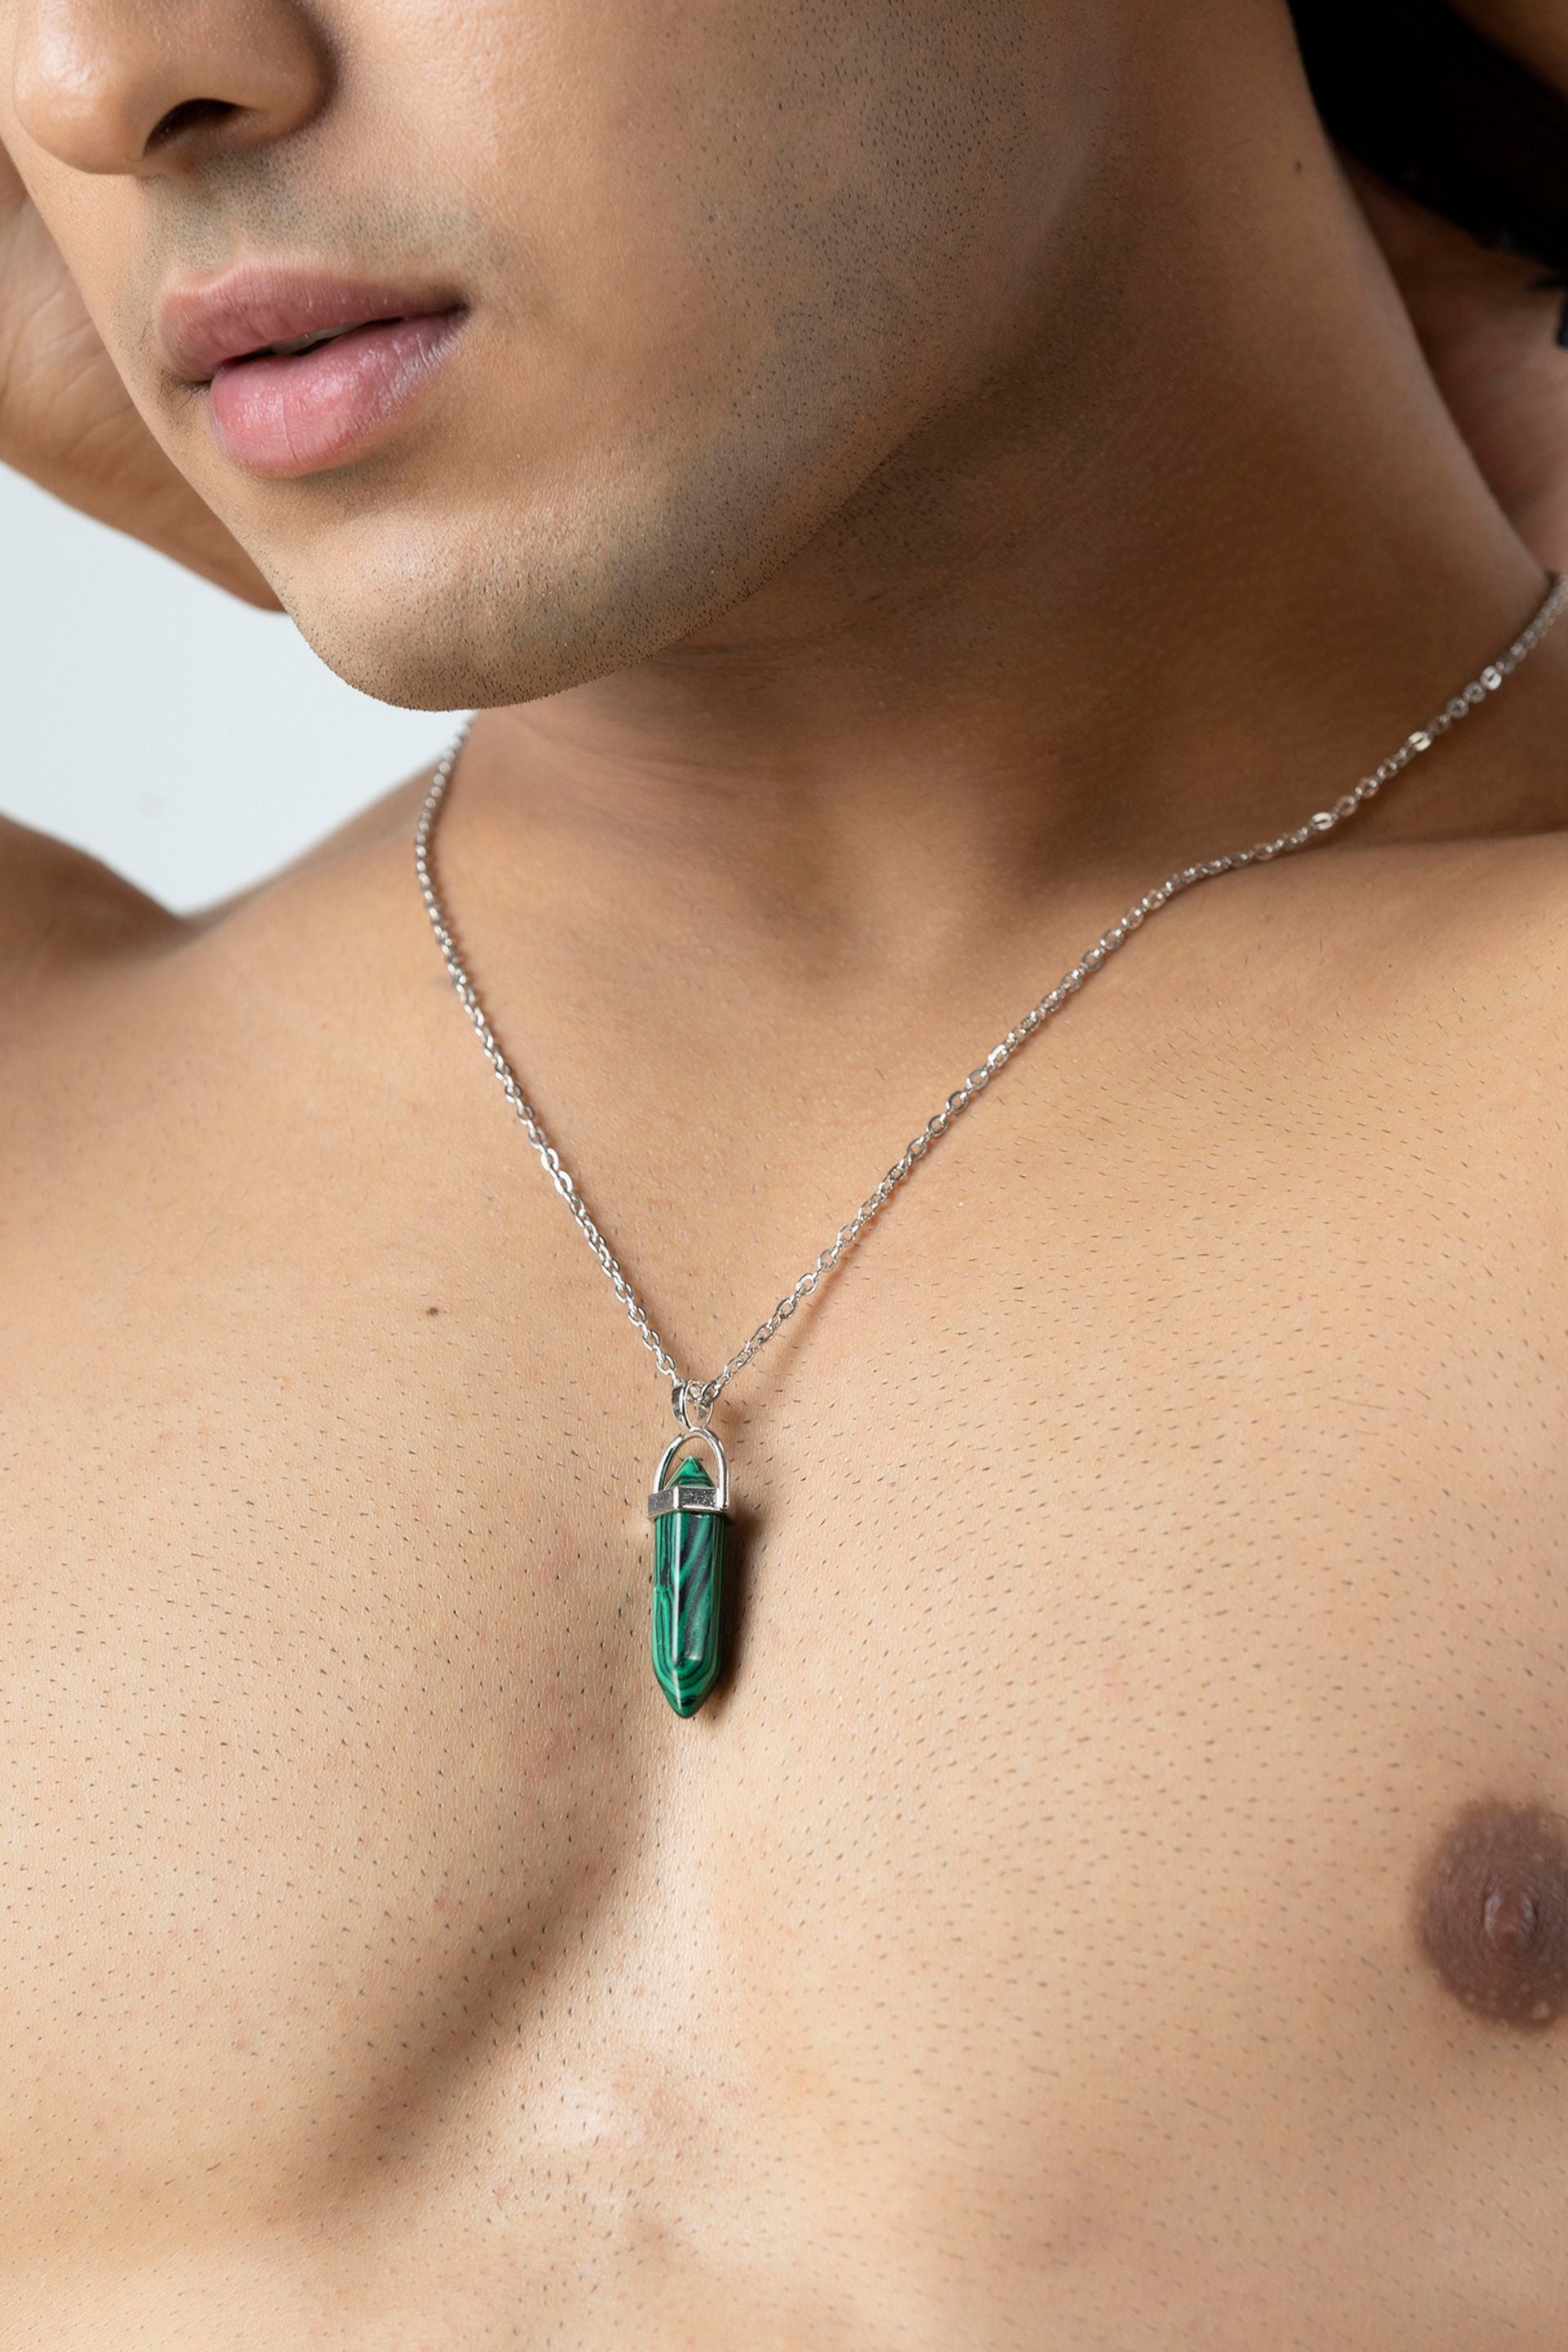 Firangi Yarn Natural Stone Pendant Necklace Bullet Shape For Men